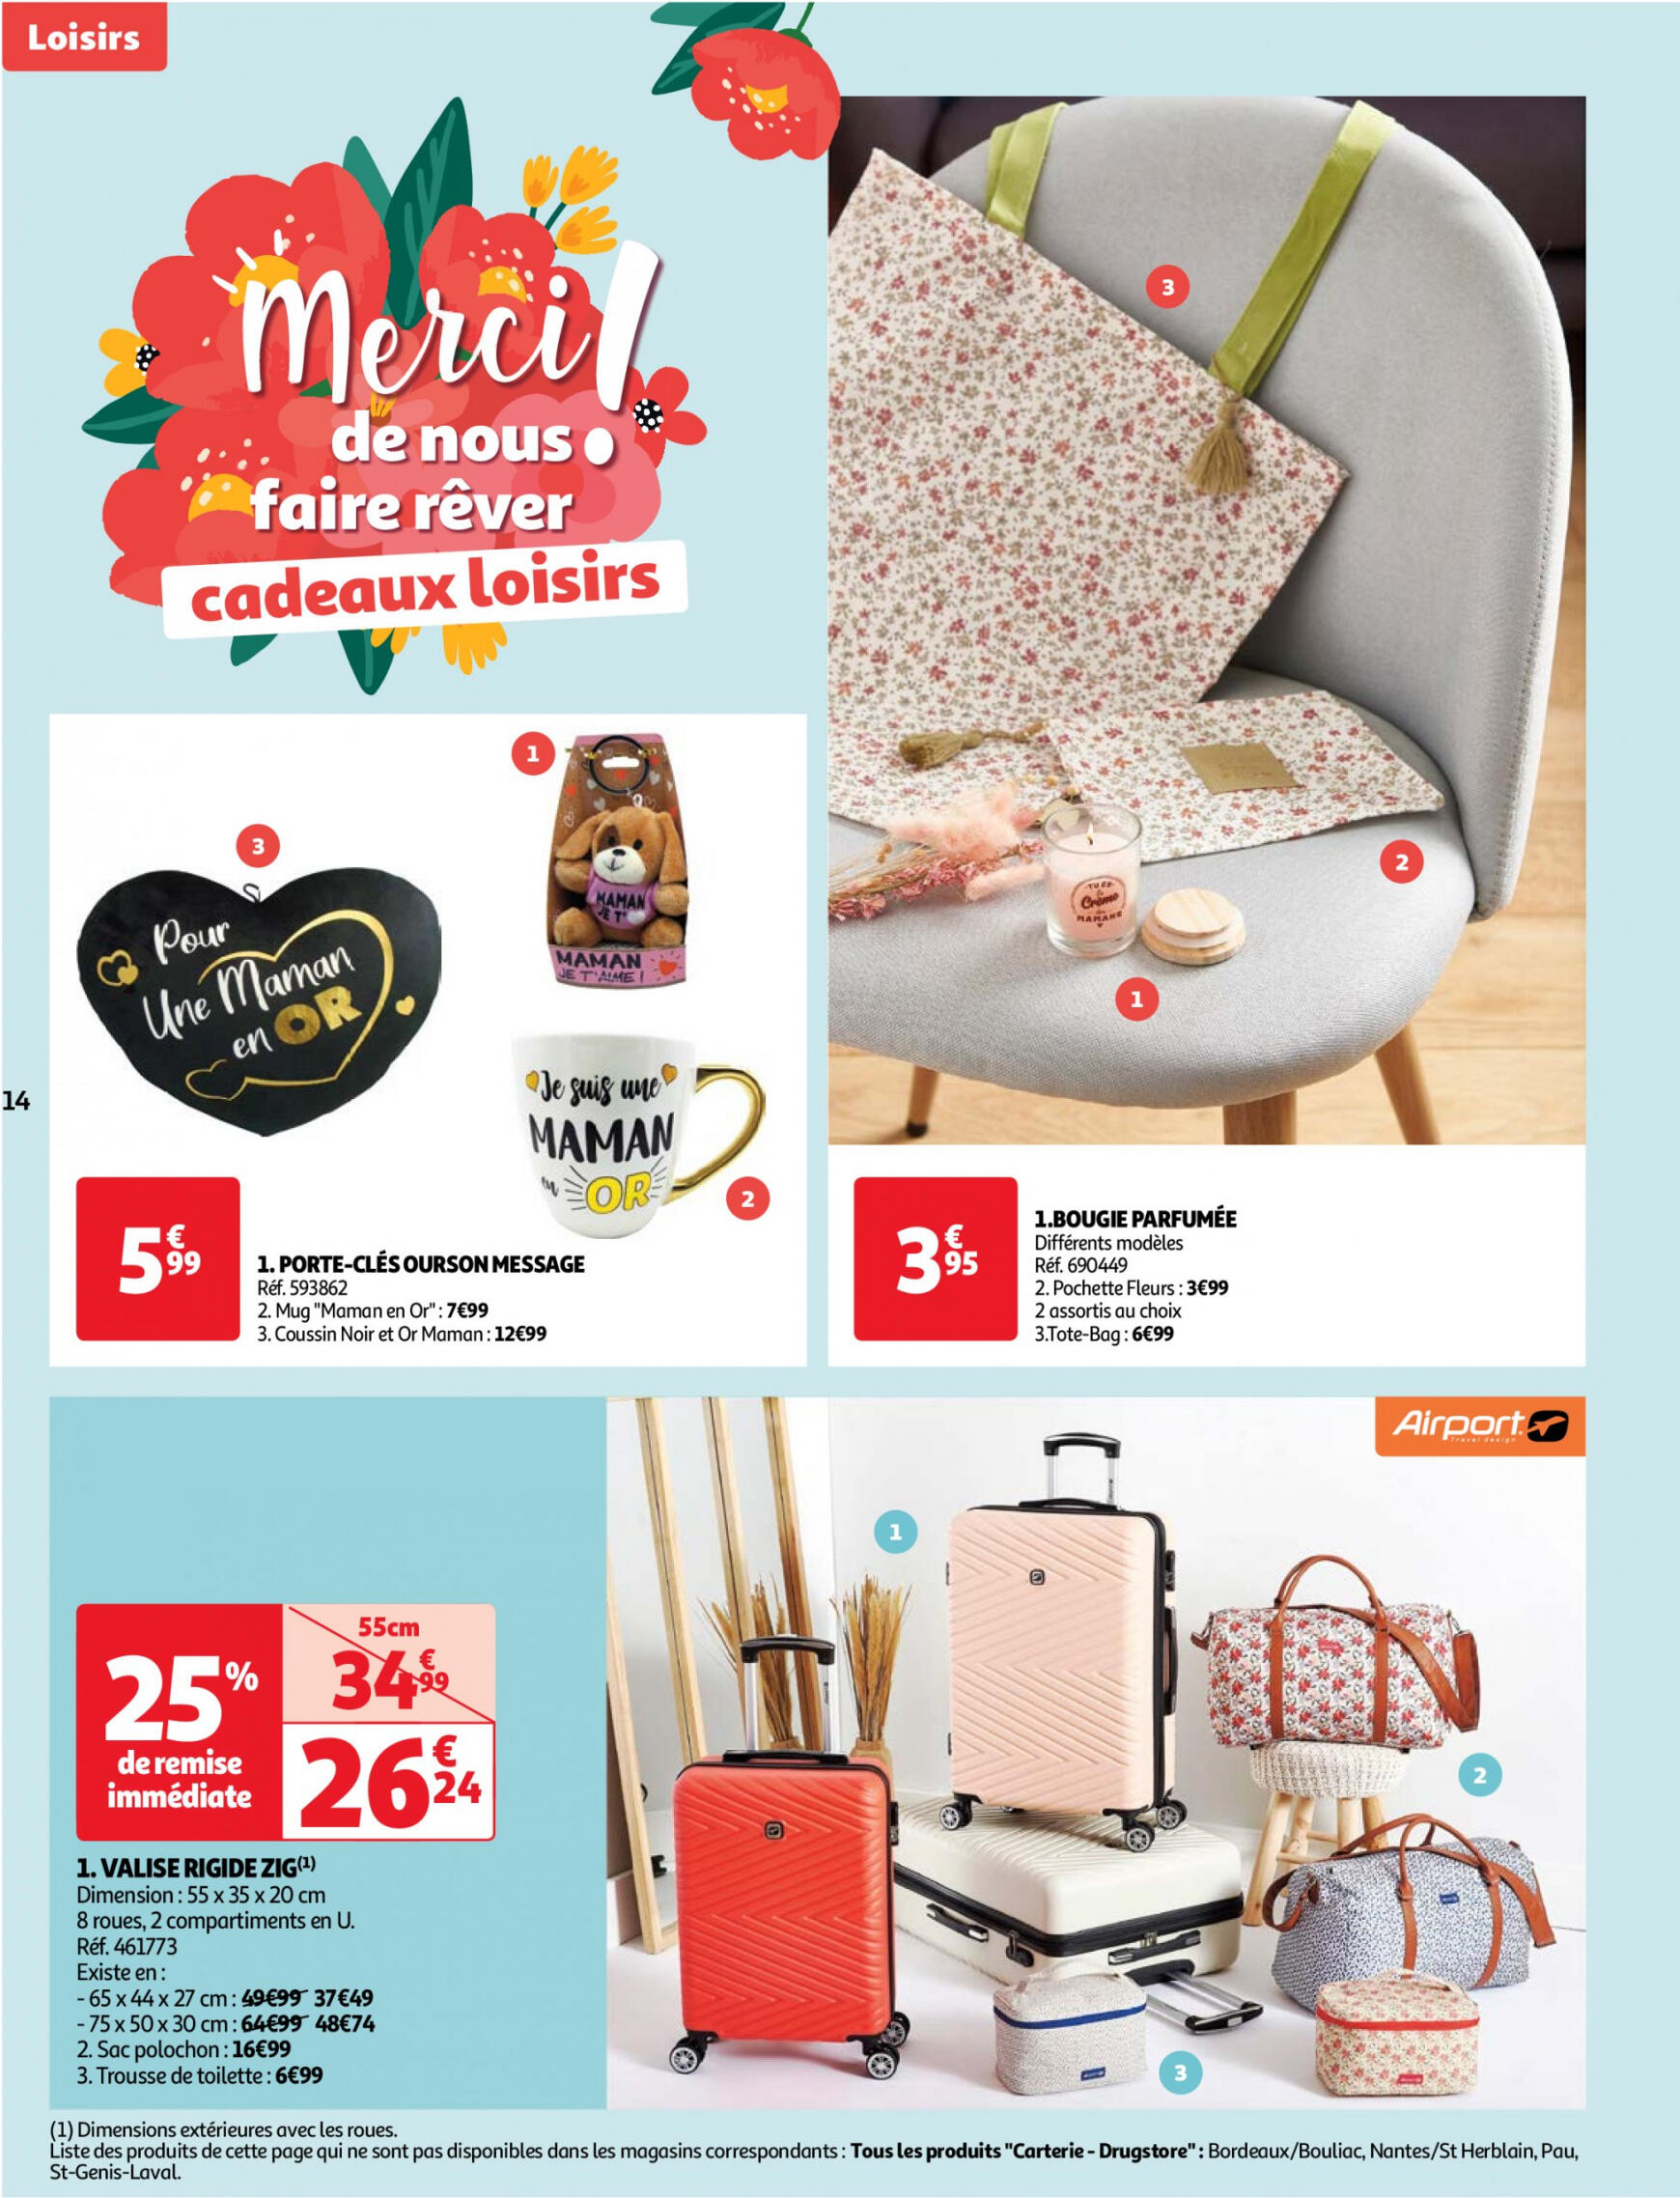 auchan - Prospectus Auchan - Merci maman actuel 14.05. - 26.05. - page: 14